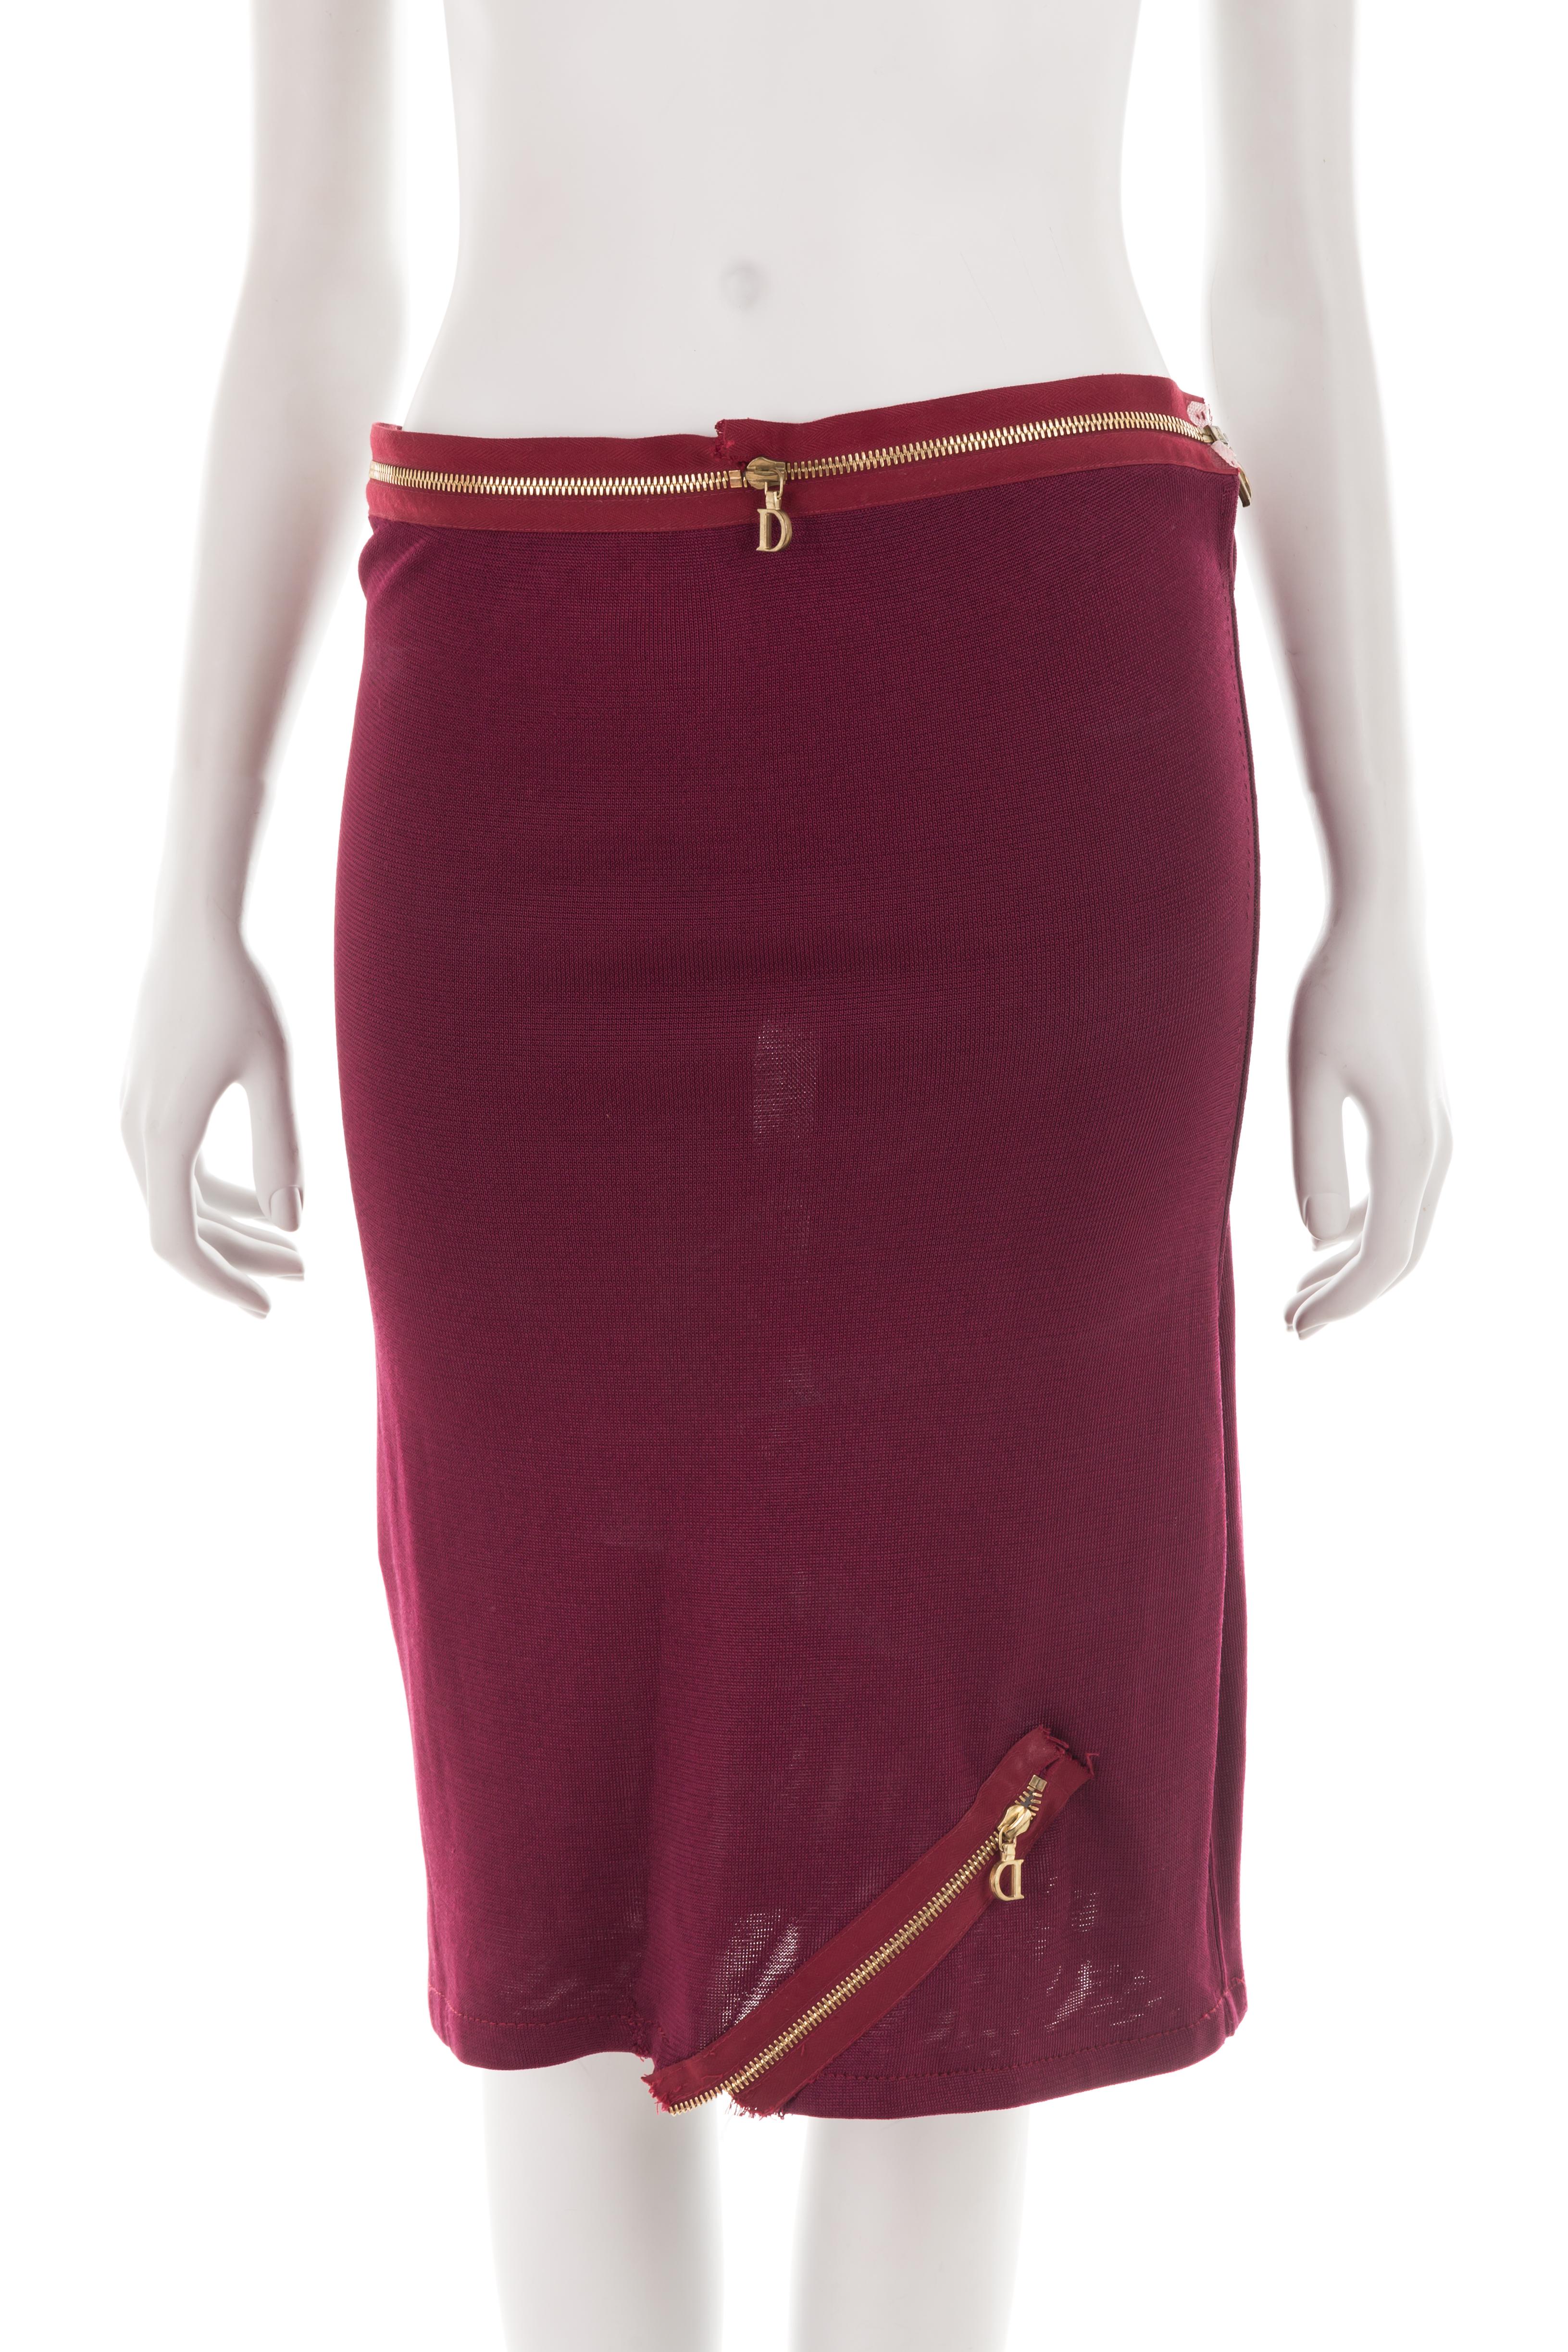 Women's or Men's Christian Dior S/S 2001 burgundy midi skirt with asymmetric logo zippers For Sale